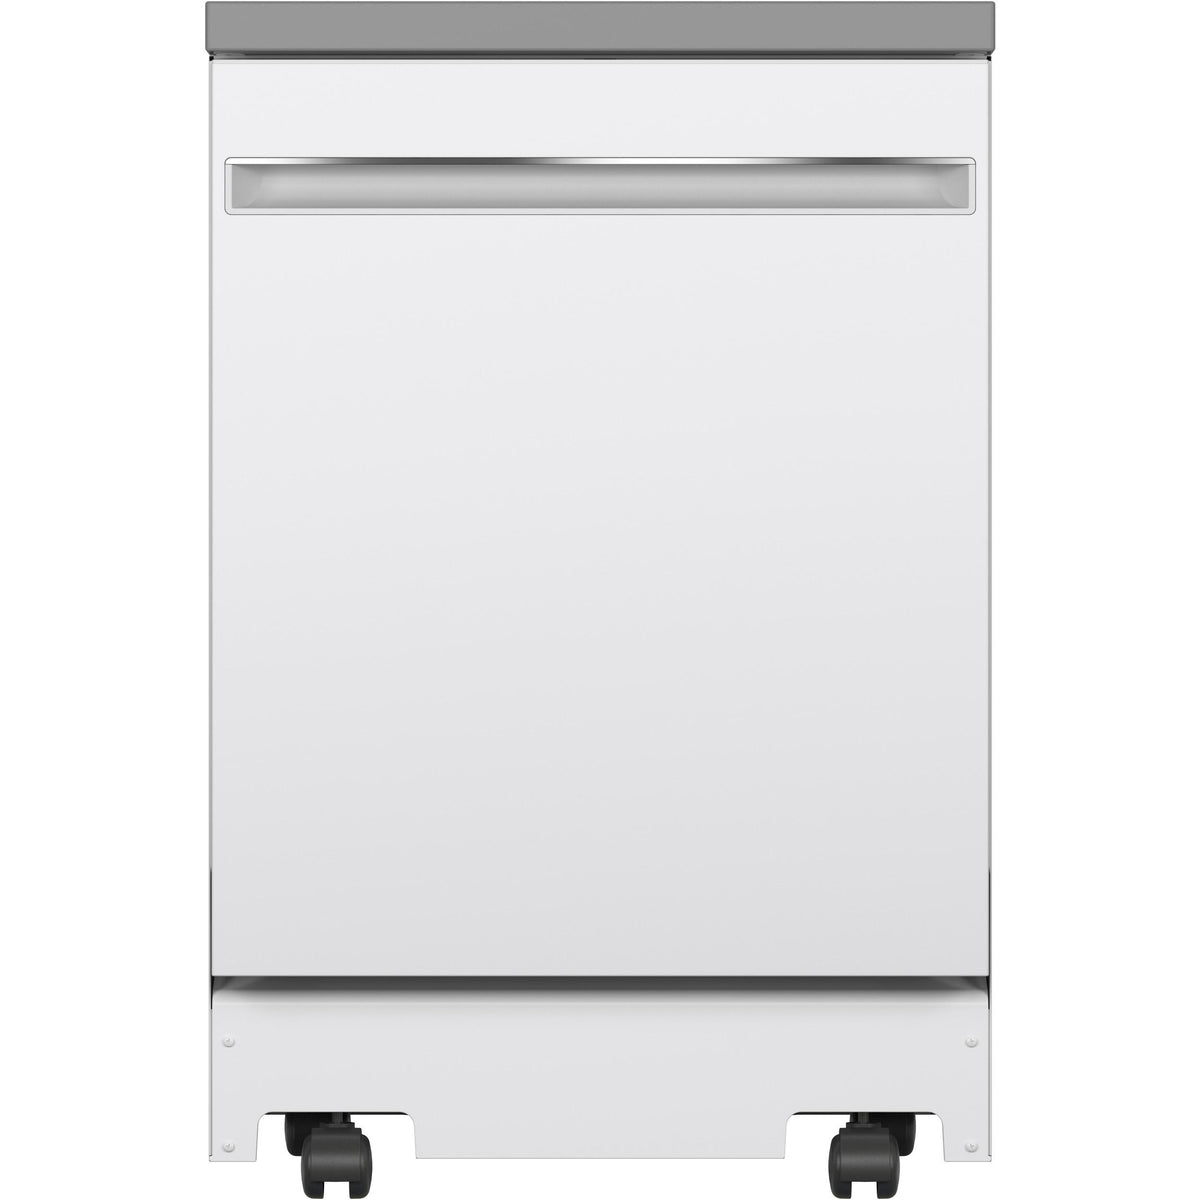 24-inch Portable Dishwasher with Sanitize Option GPT225SGLWW IMAGE 1